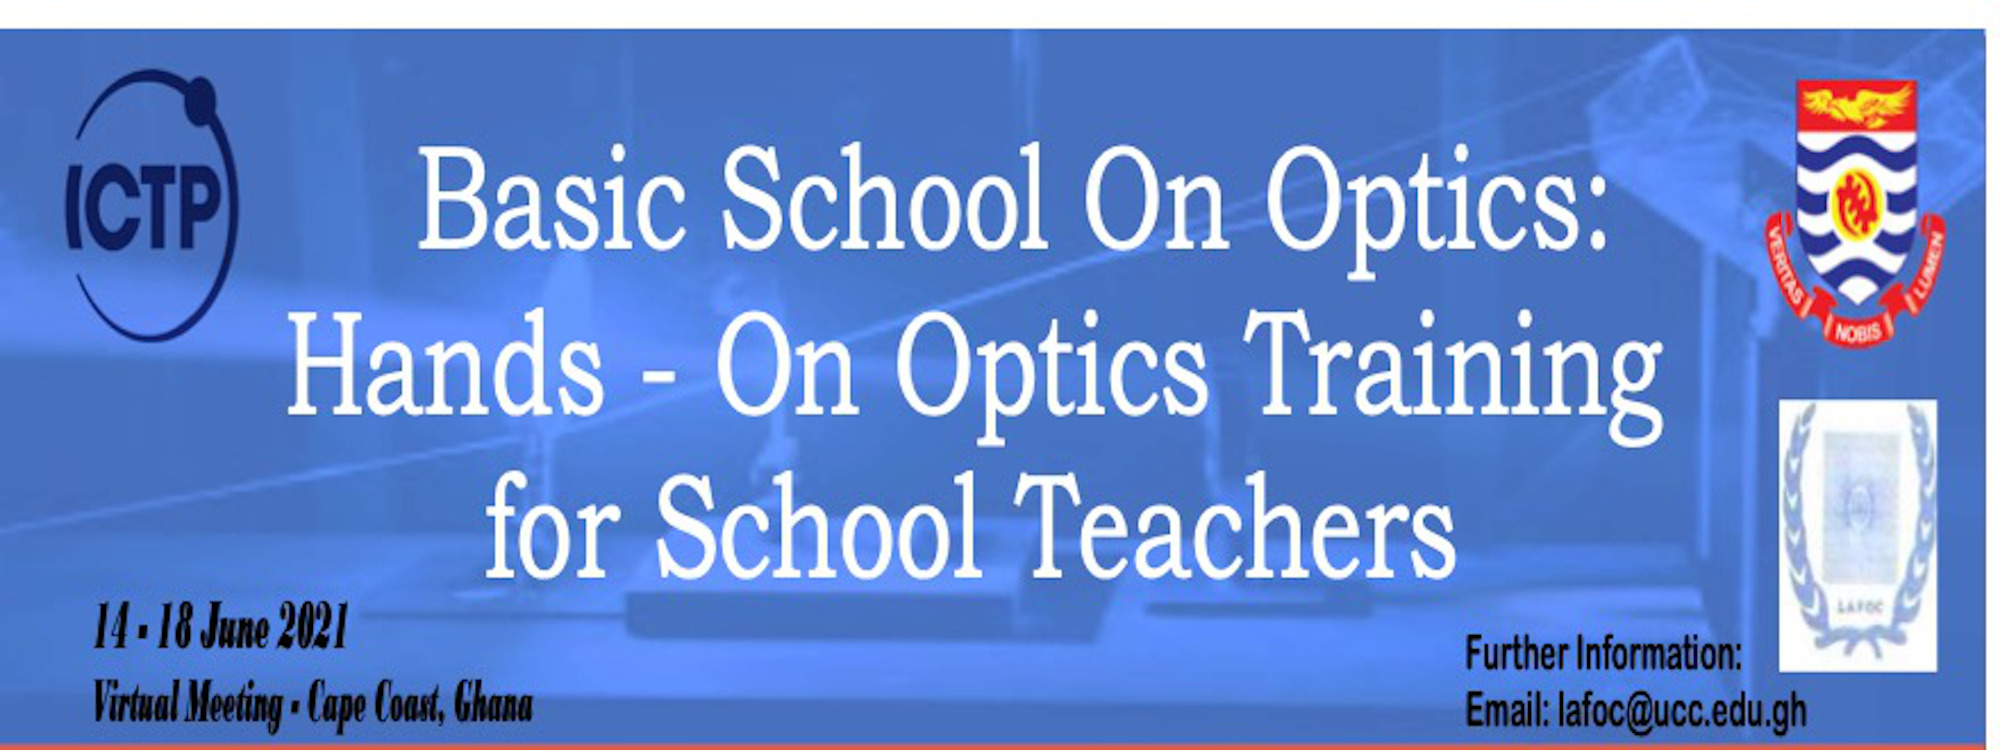 optics training